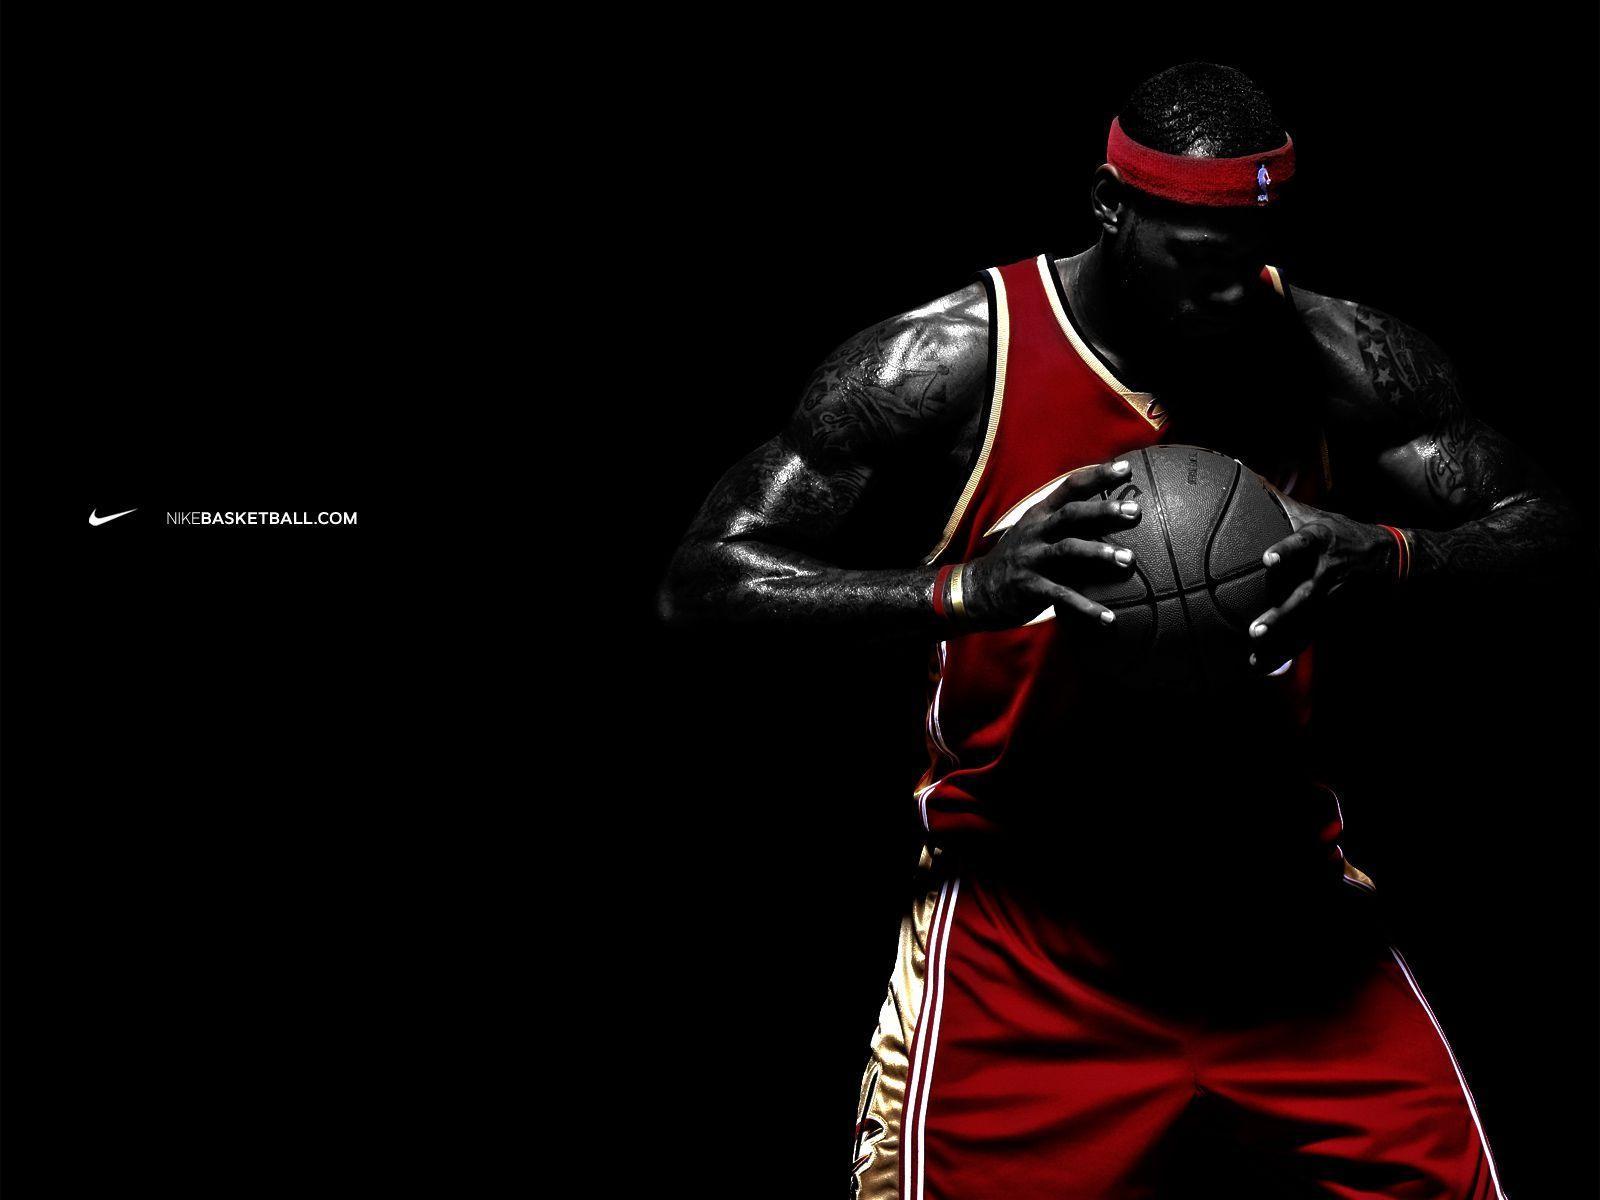 New LeBron Six / King James Wallpaper from Nike Basketball. NIKE